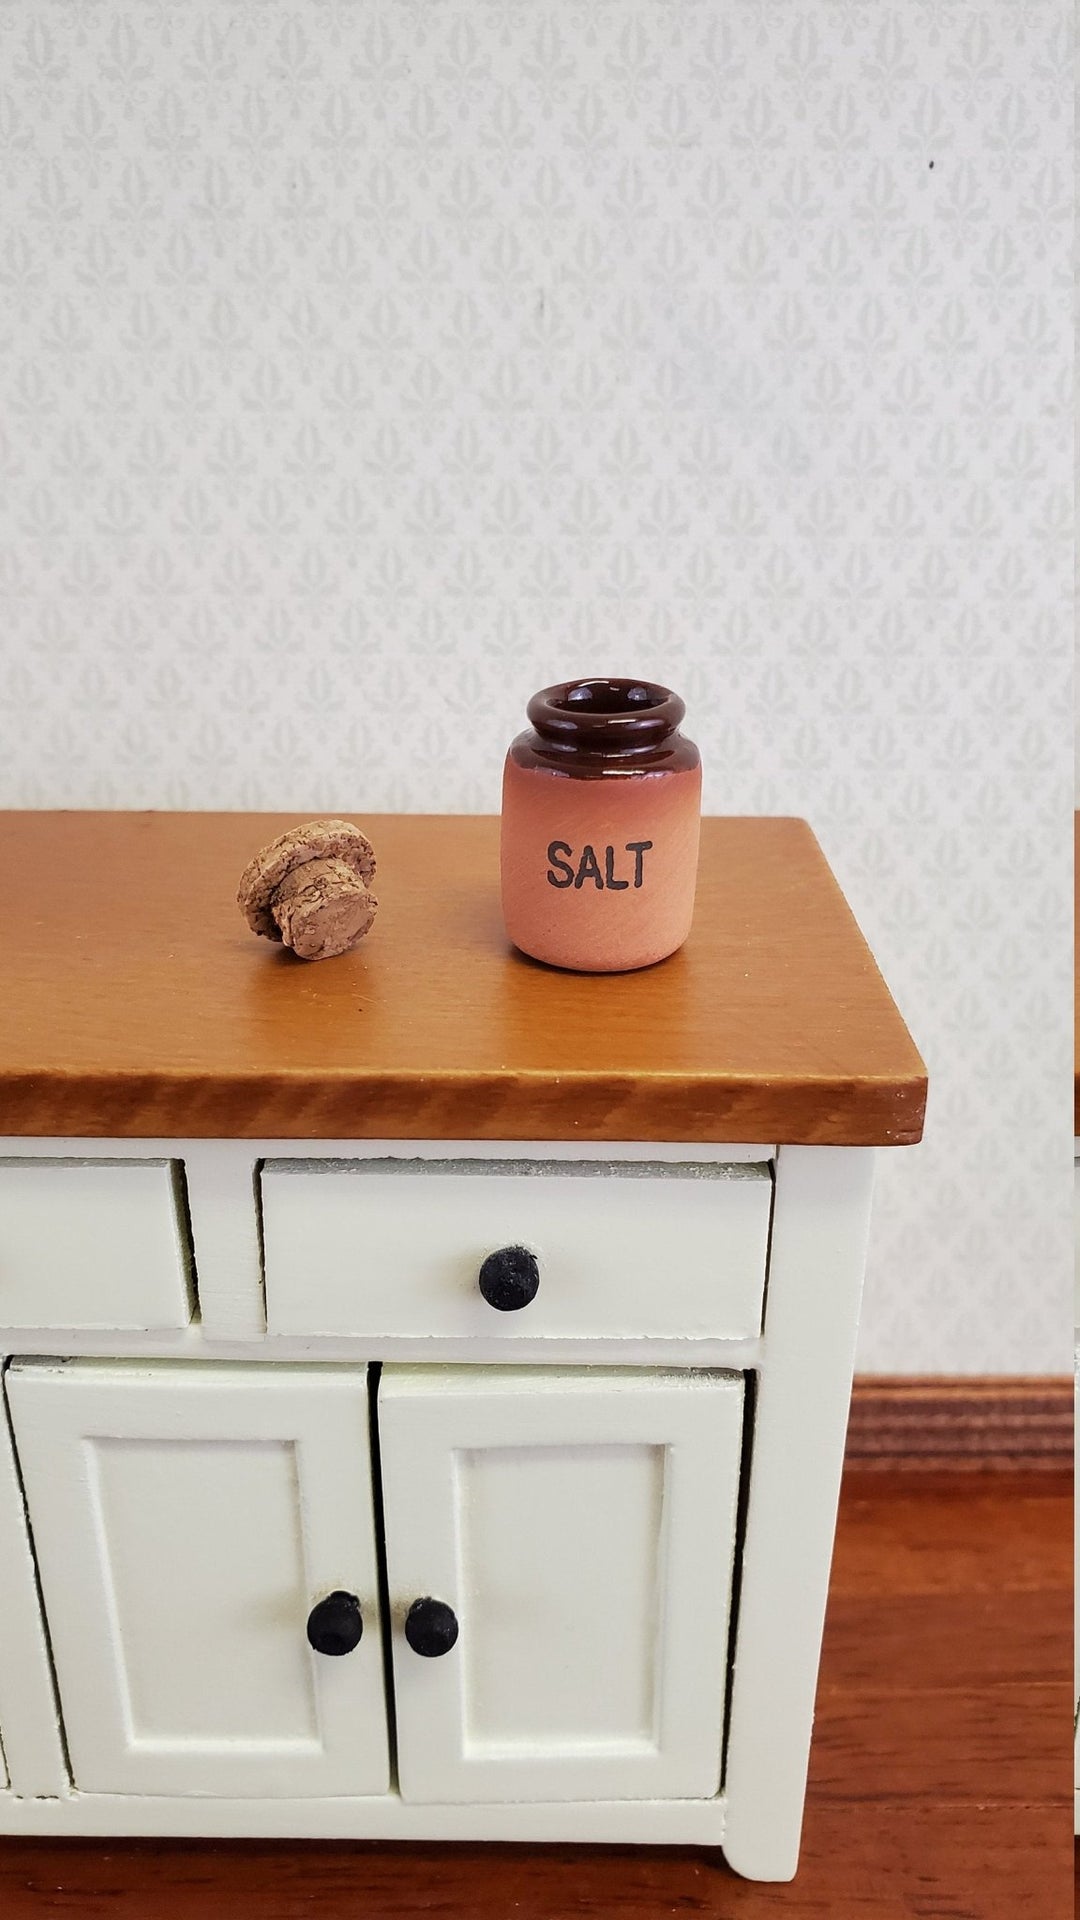 Dollhouse Miniature Terra Cotta SALT Bin with Cork Top 1:12 Scale Handmade Kitchen - Miniature Crush